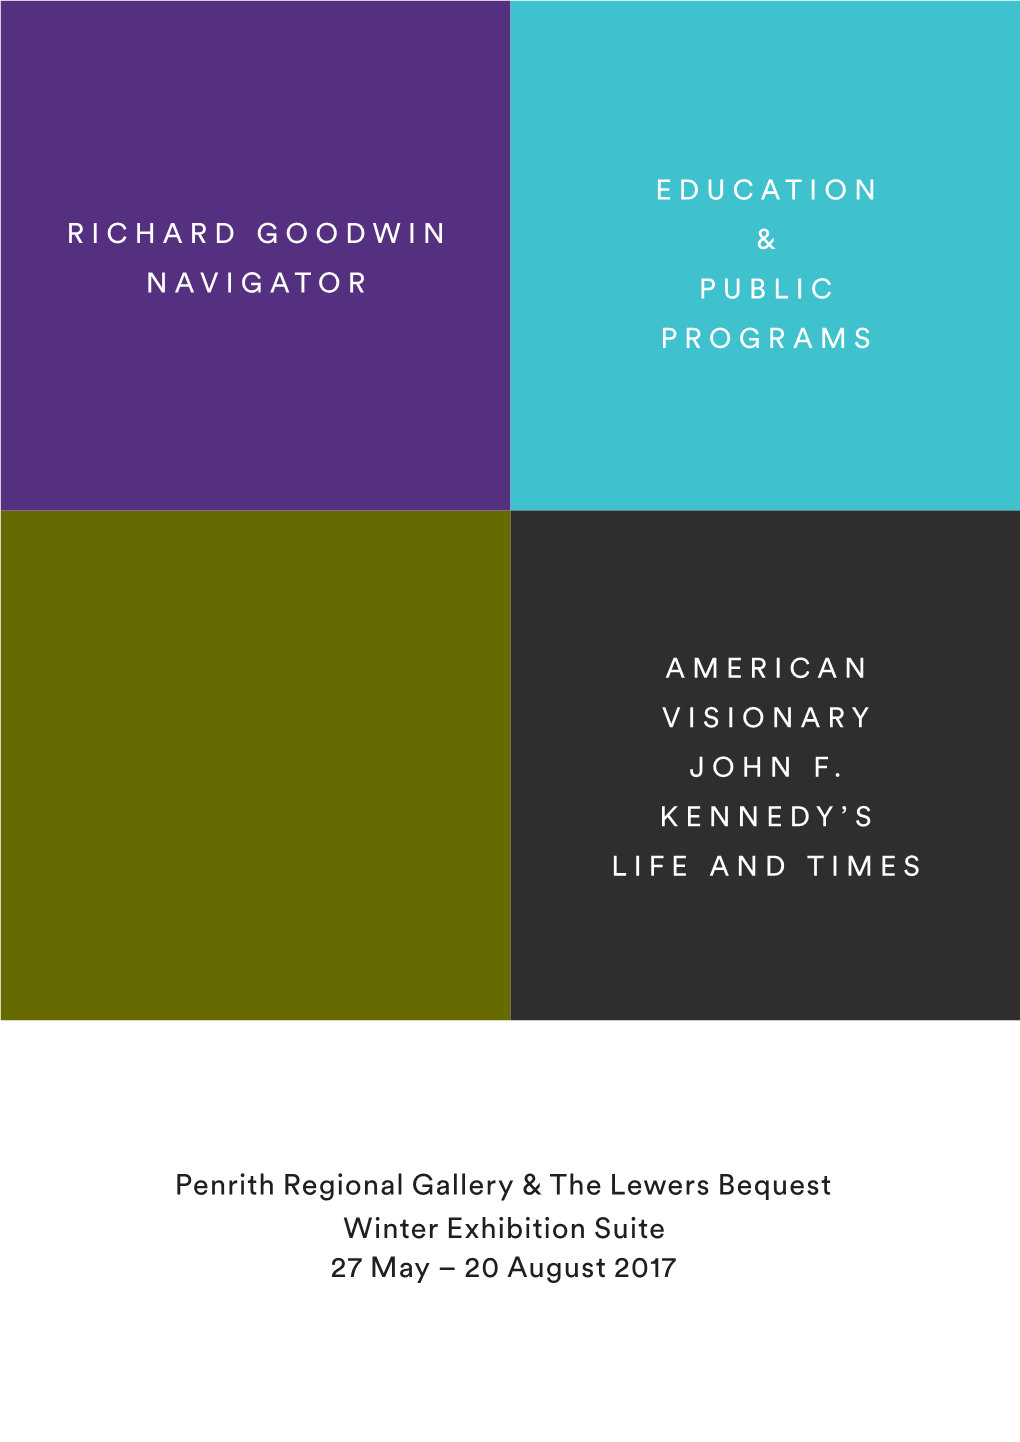 Richard Goodwin Navigator Education & Public